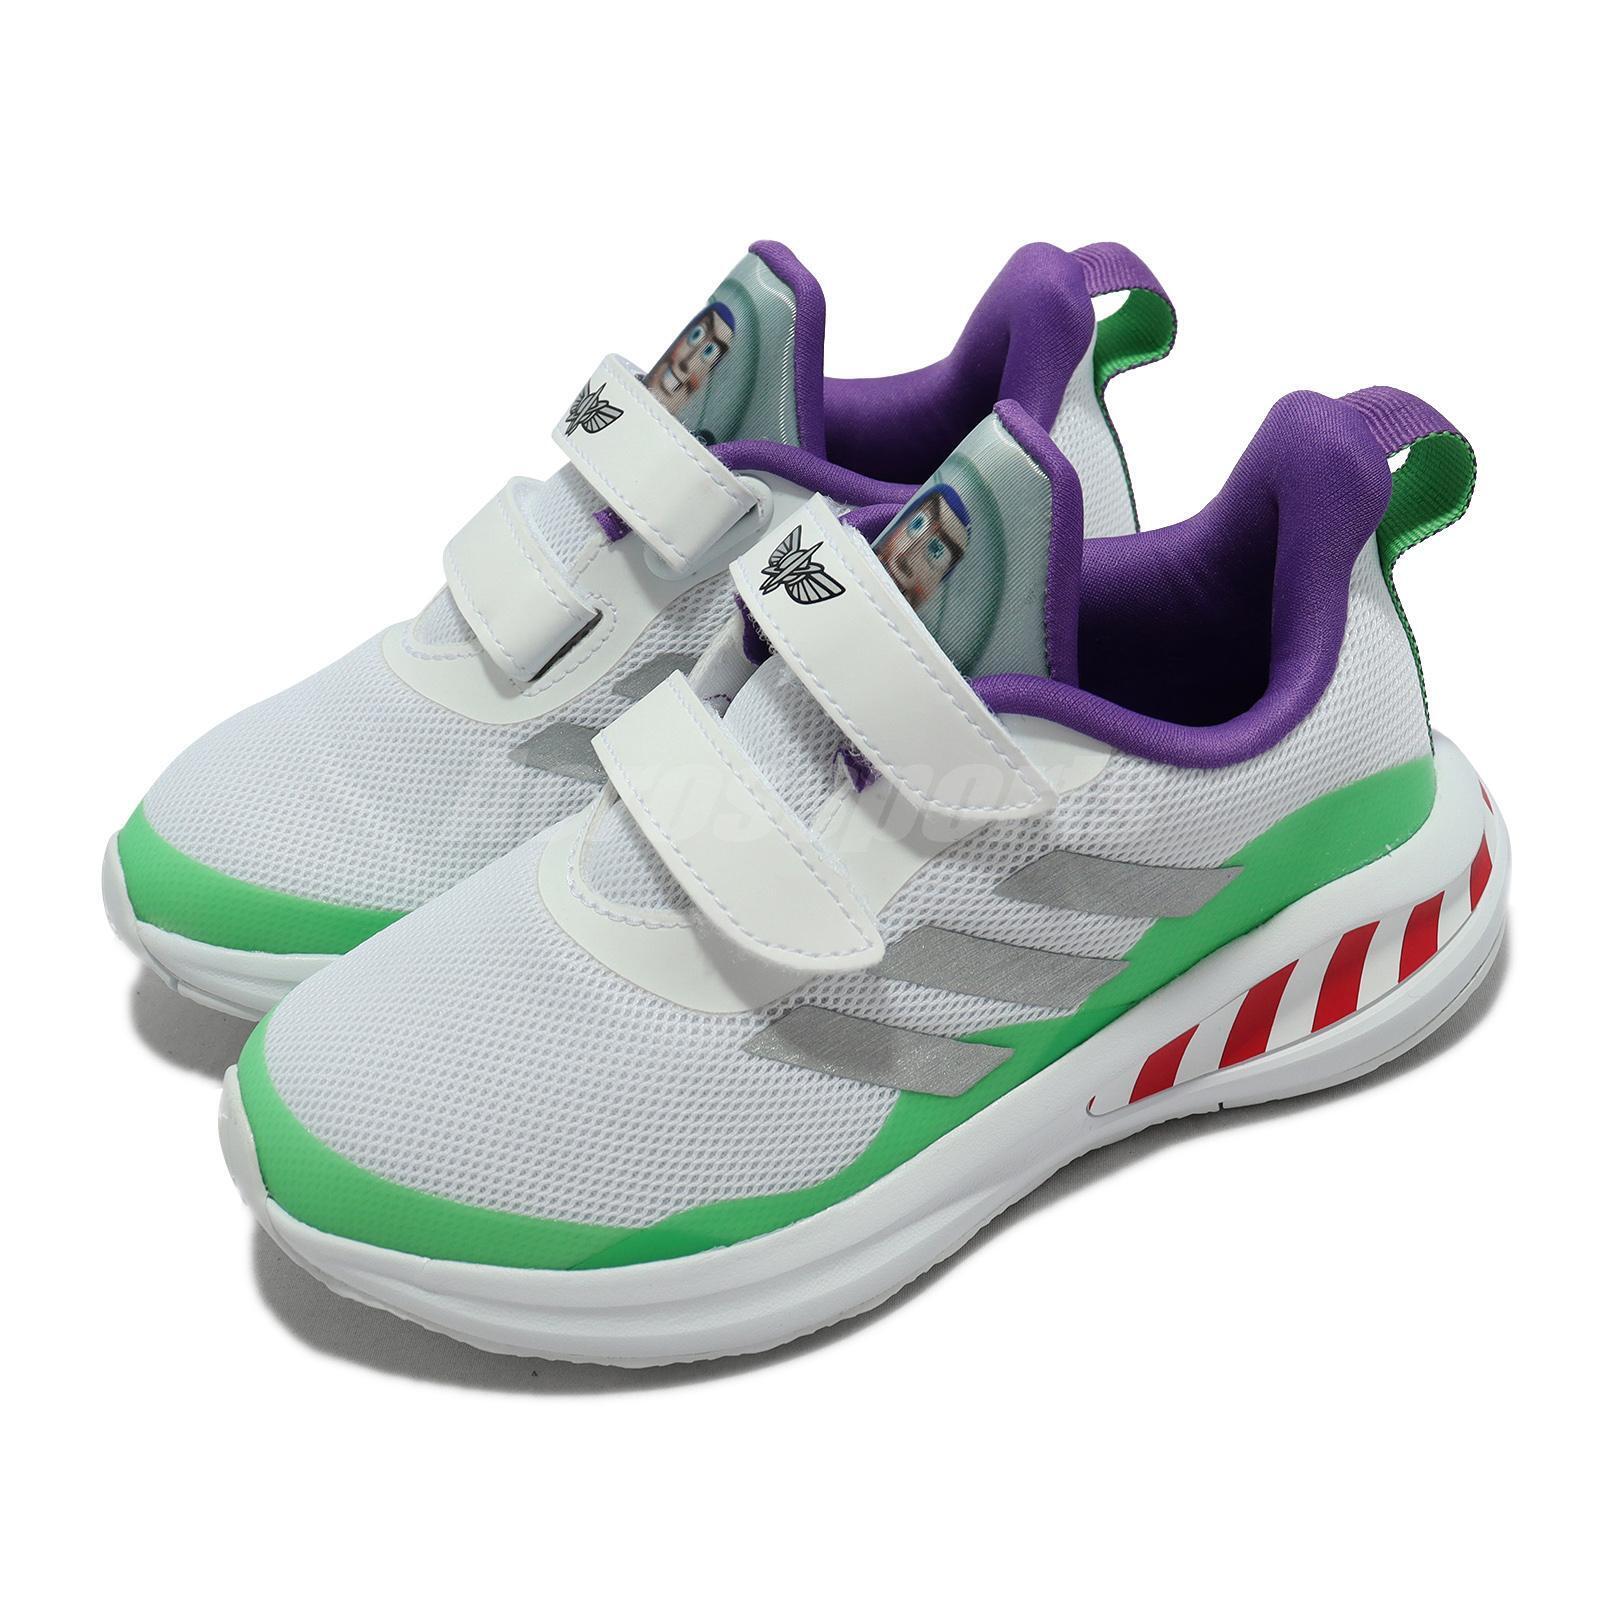 Adidas X Disney Racer TR21 Toy Story Buzz Lightyear shoes